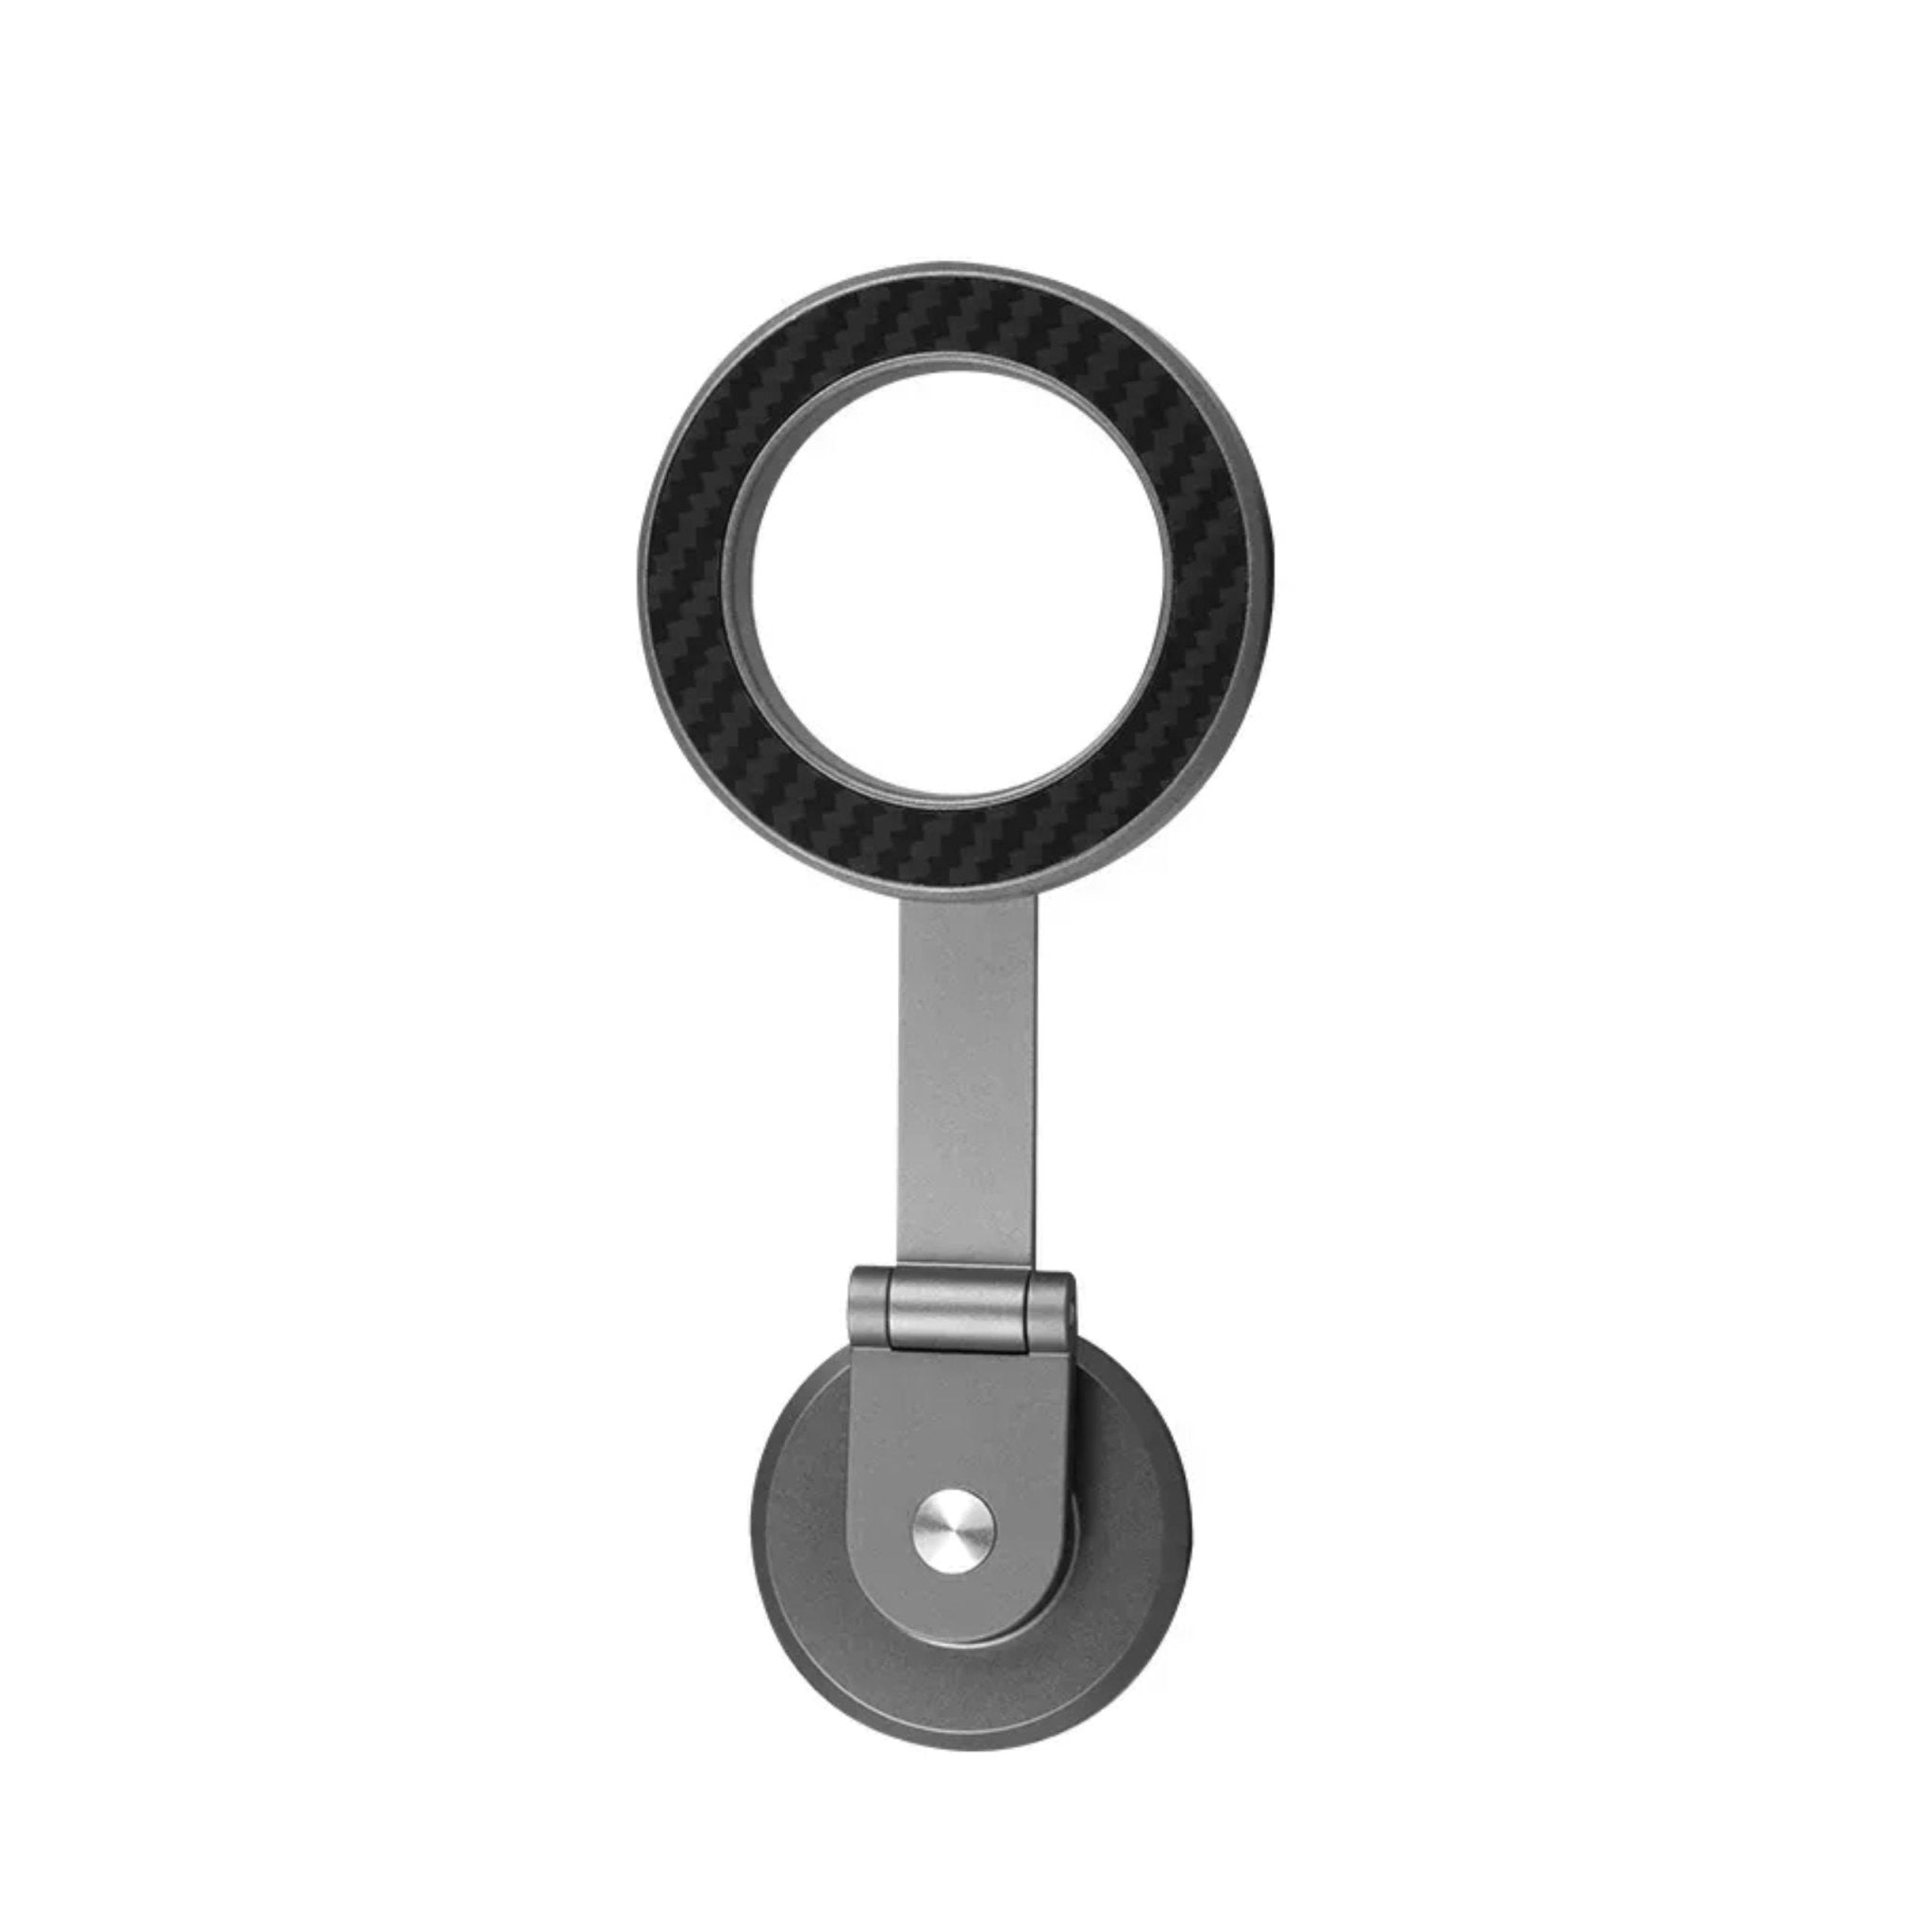 Anker Car Phone Holder Magnetic Bracket - Silver